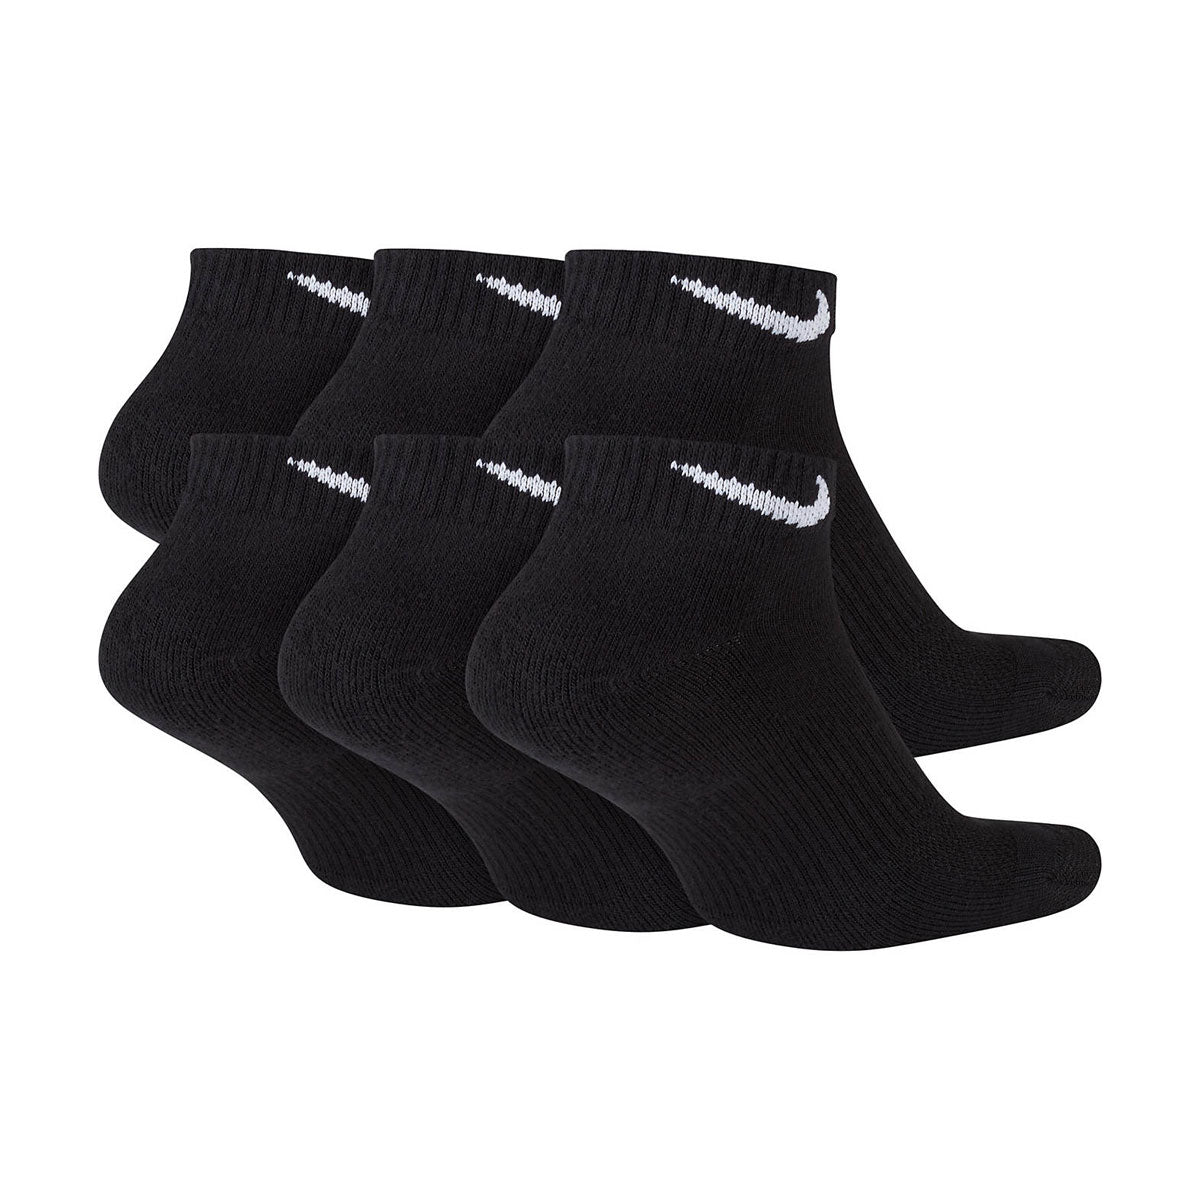 Nike Men's Everyday Plus Cushioned Low Cut Training Socks Black - 6 Pack